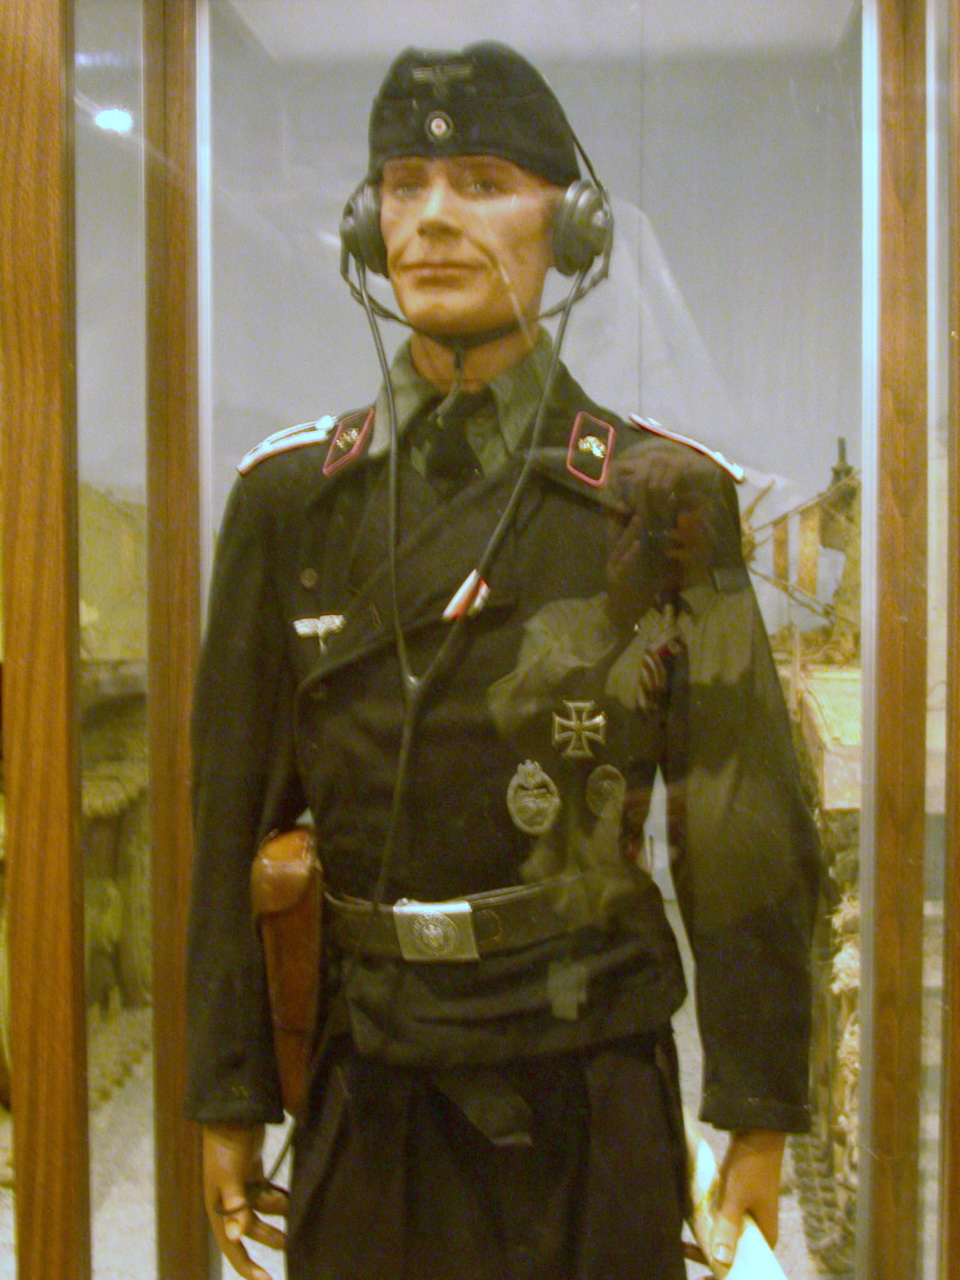 Unterofficier (Sergeant) Panzer Uniform of the Wehrmacht - a photo on ...